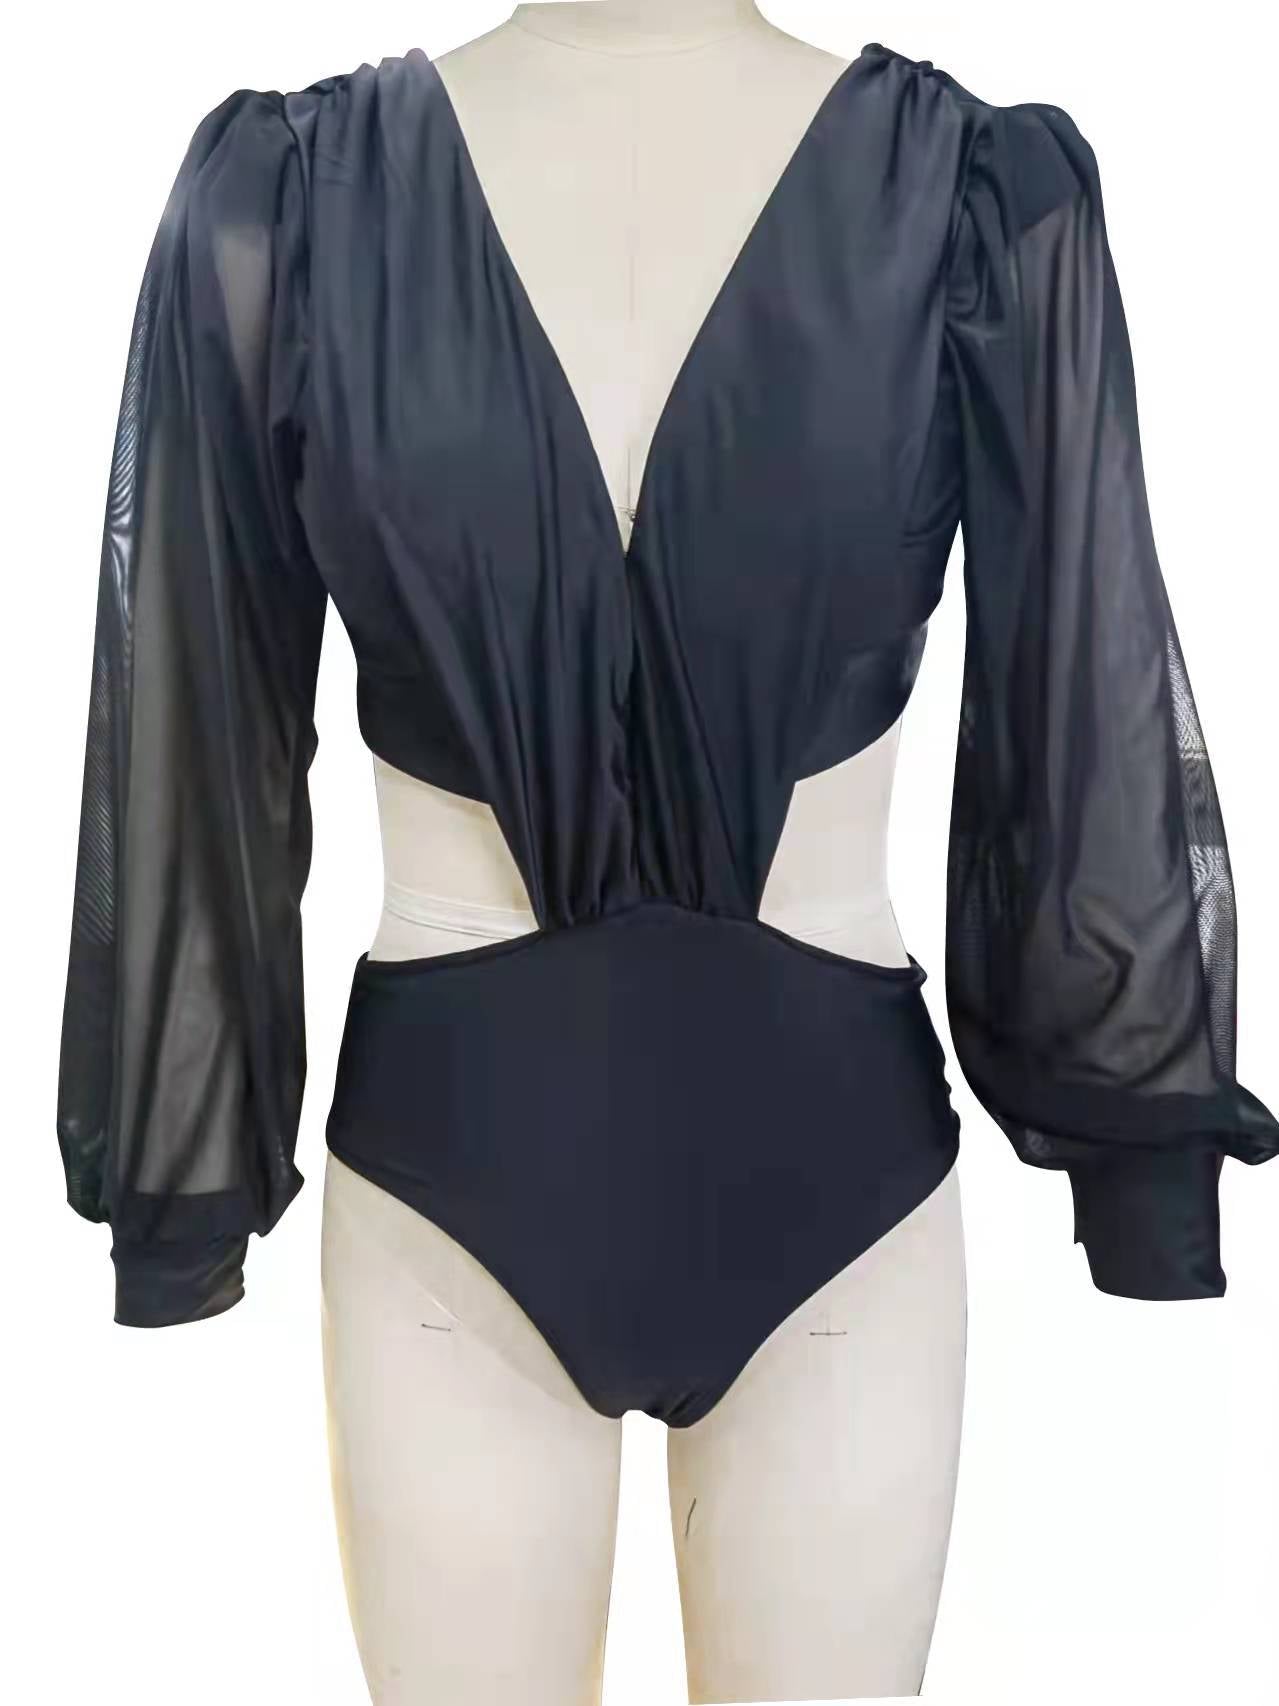 Sexy Long Sleeves Summer Bikini Swimsuits-Swimwear-Black-S-Free Shipping Leatheretro